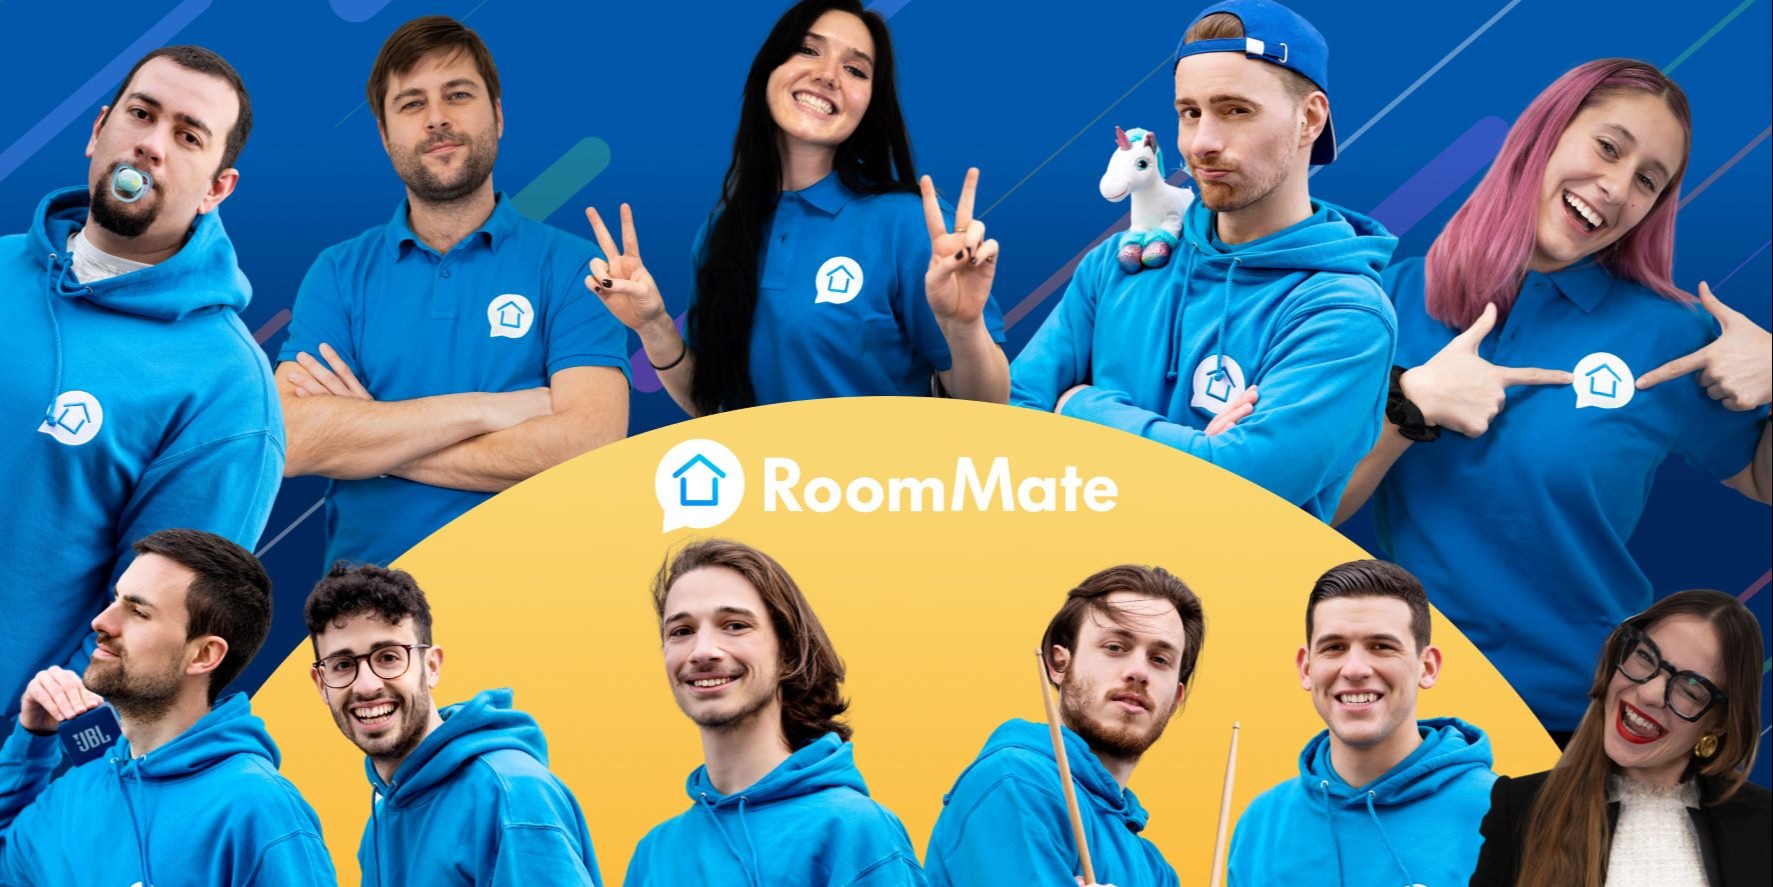 Roommate_team_highquality